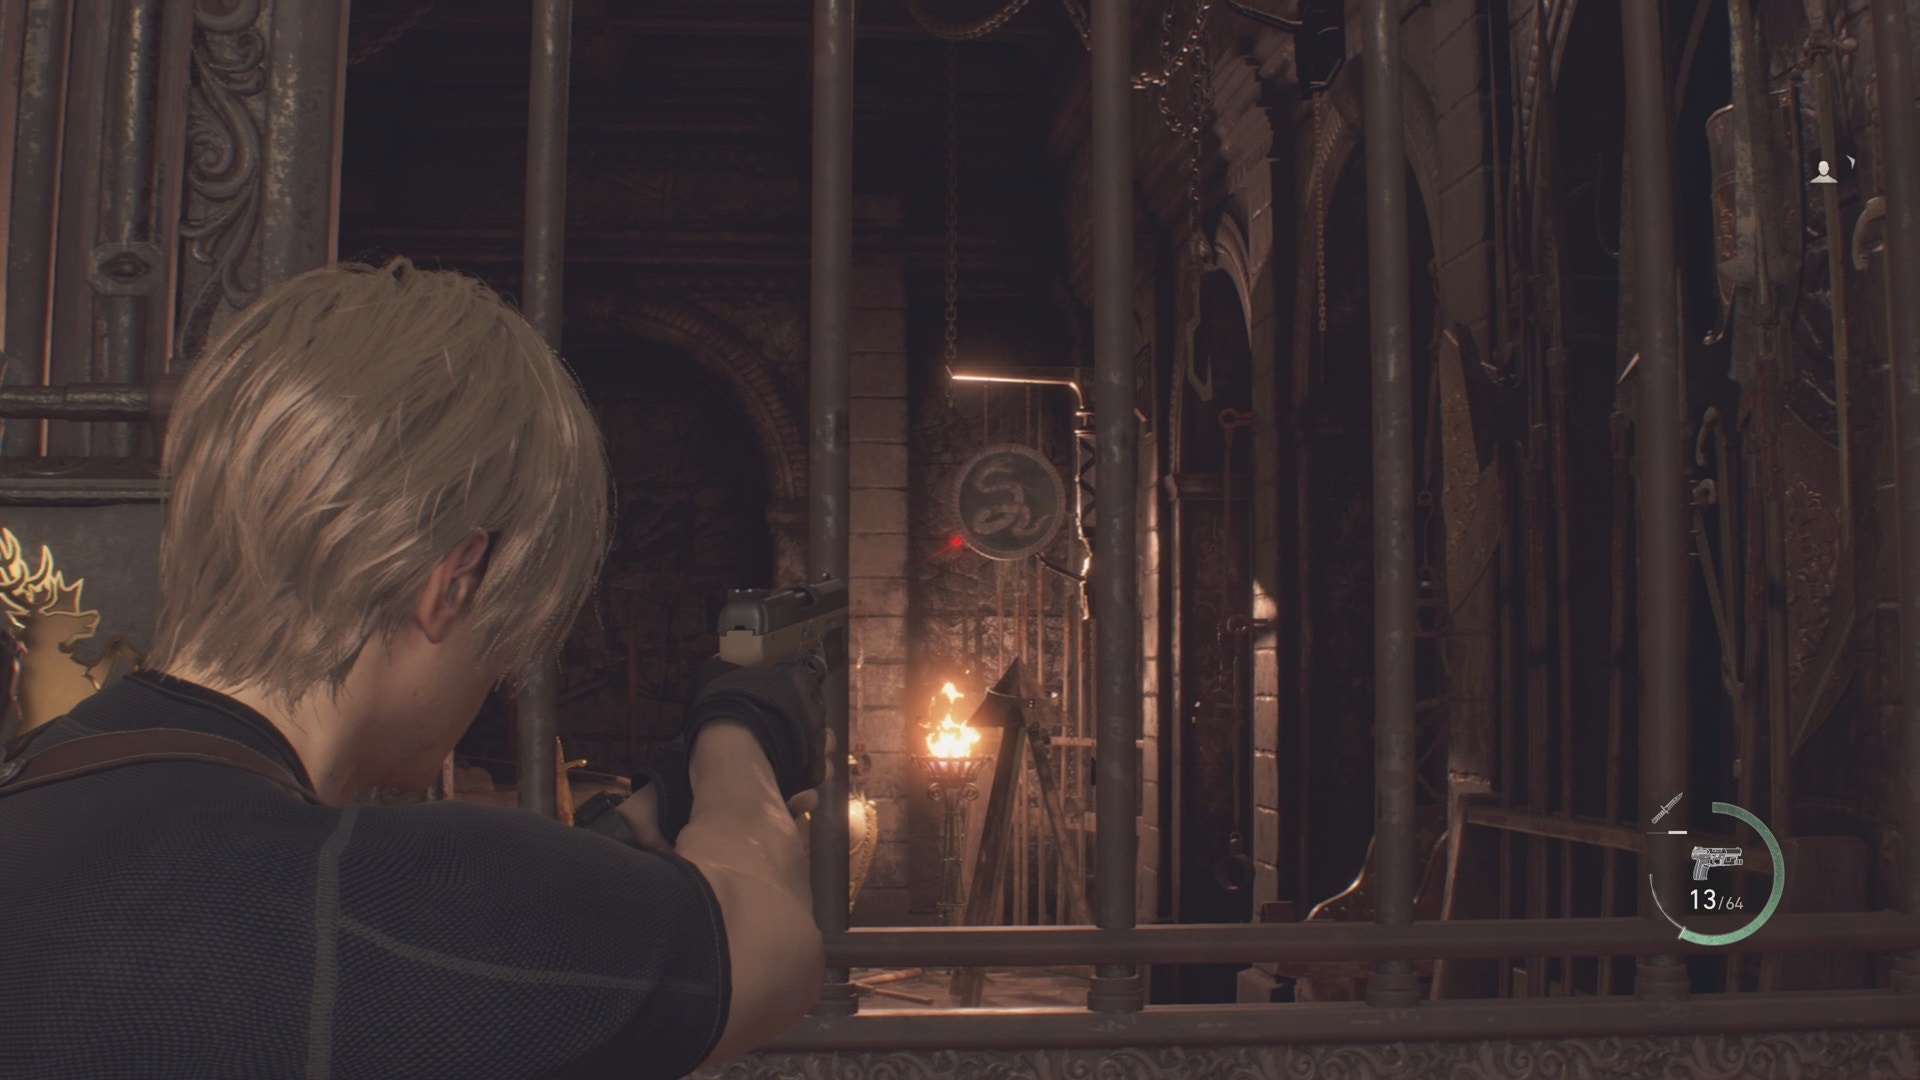 Jogo Resident Evil 4 Remake para PS5 - ARCADERAMA GAMES